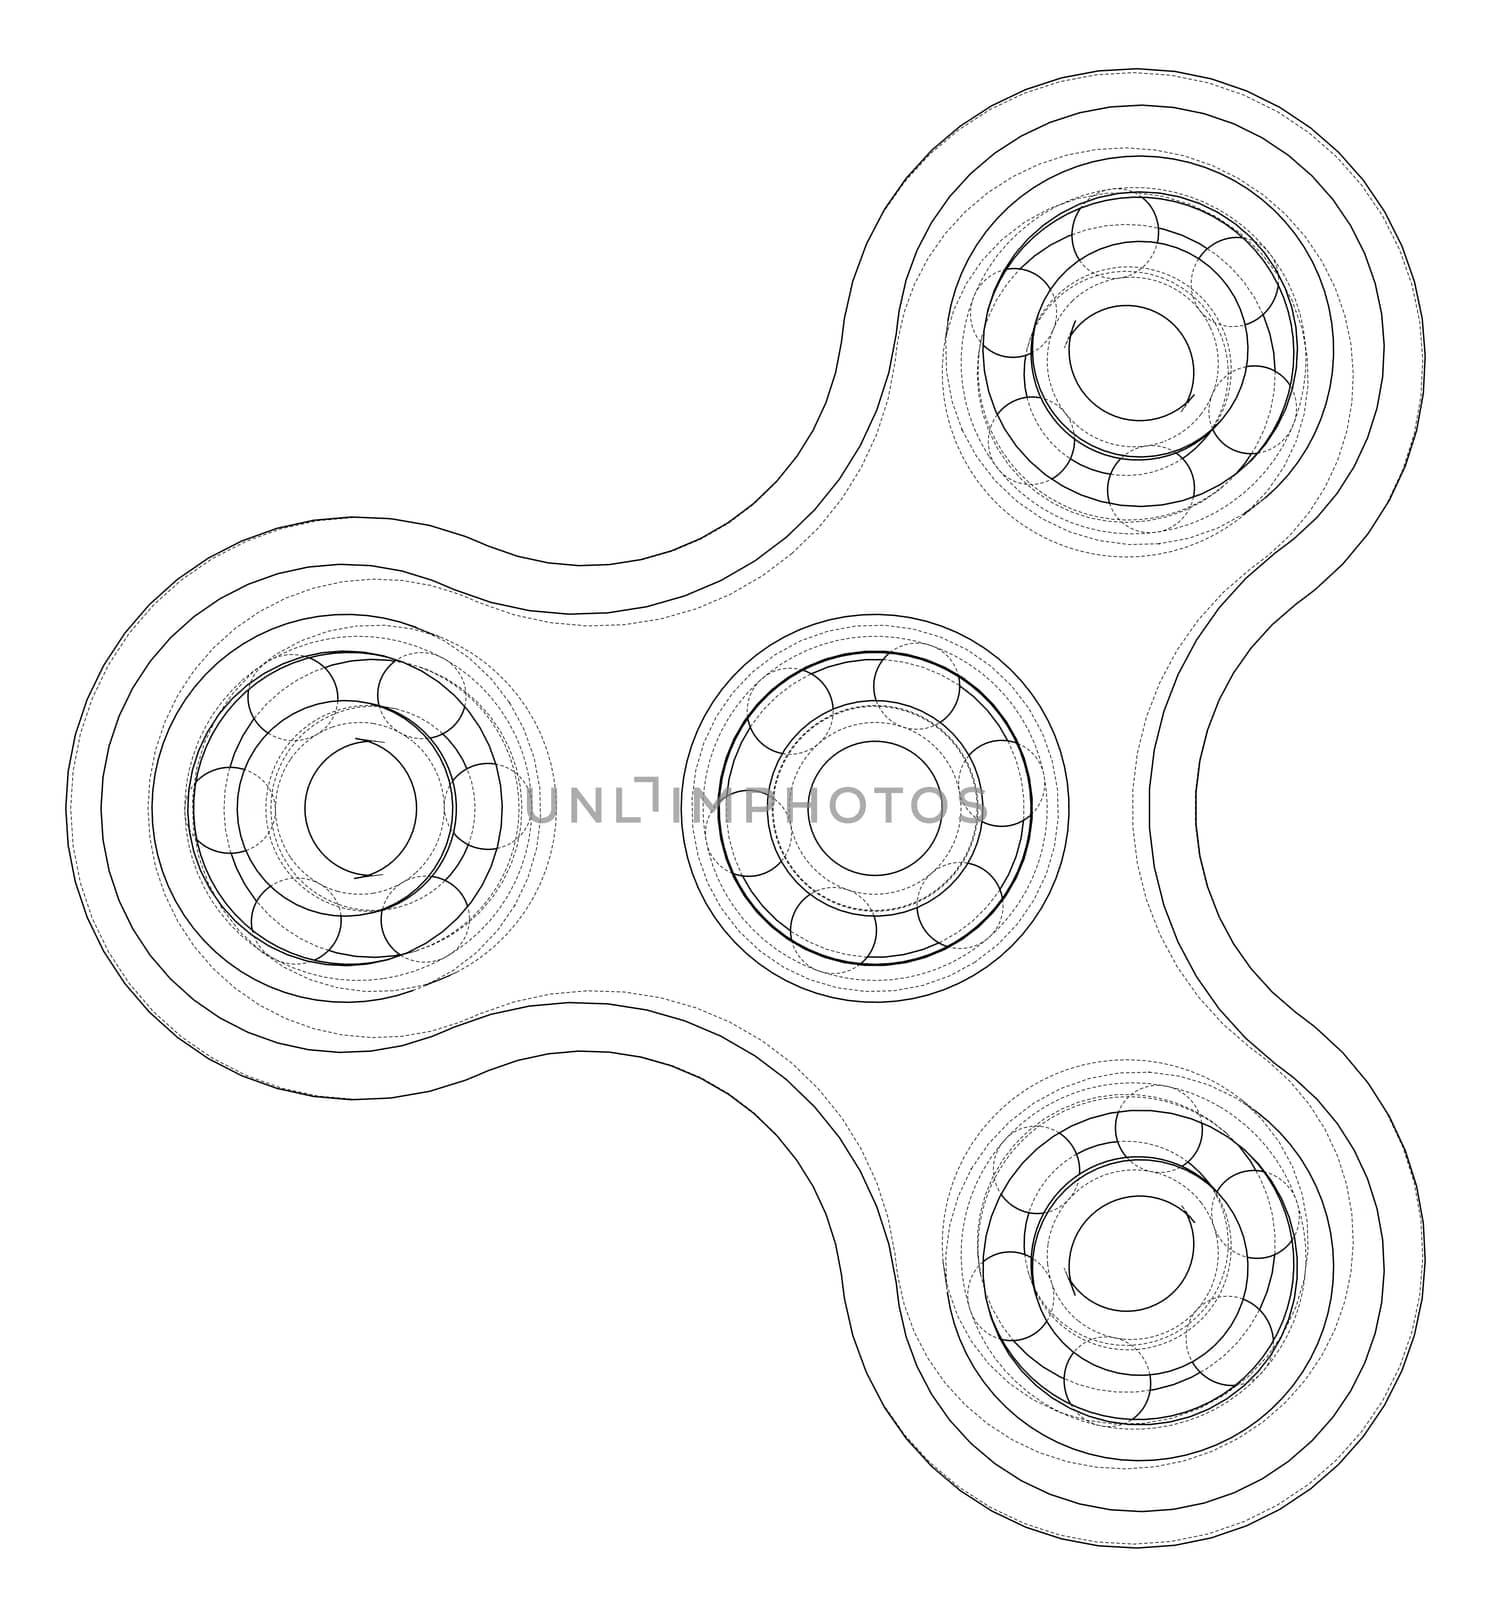 Hand spinner outline. 3d illustration. Wire-frame style